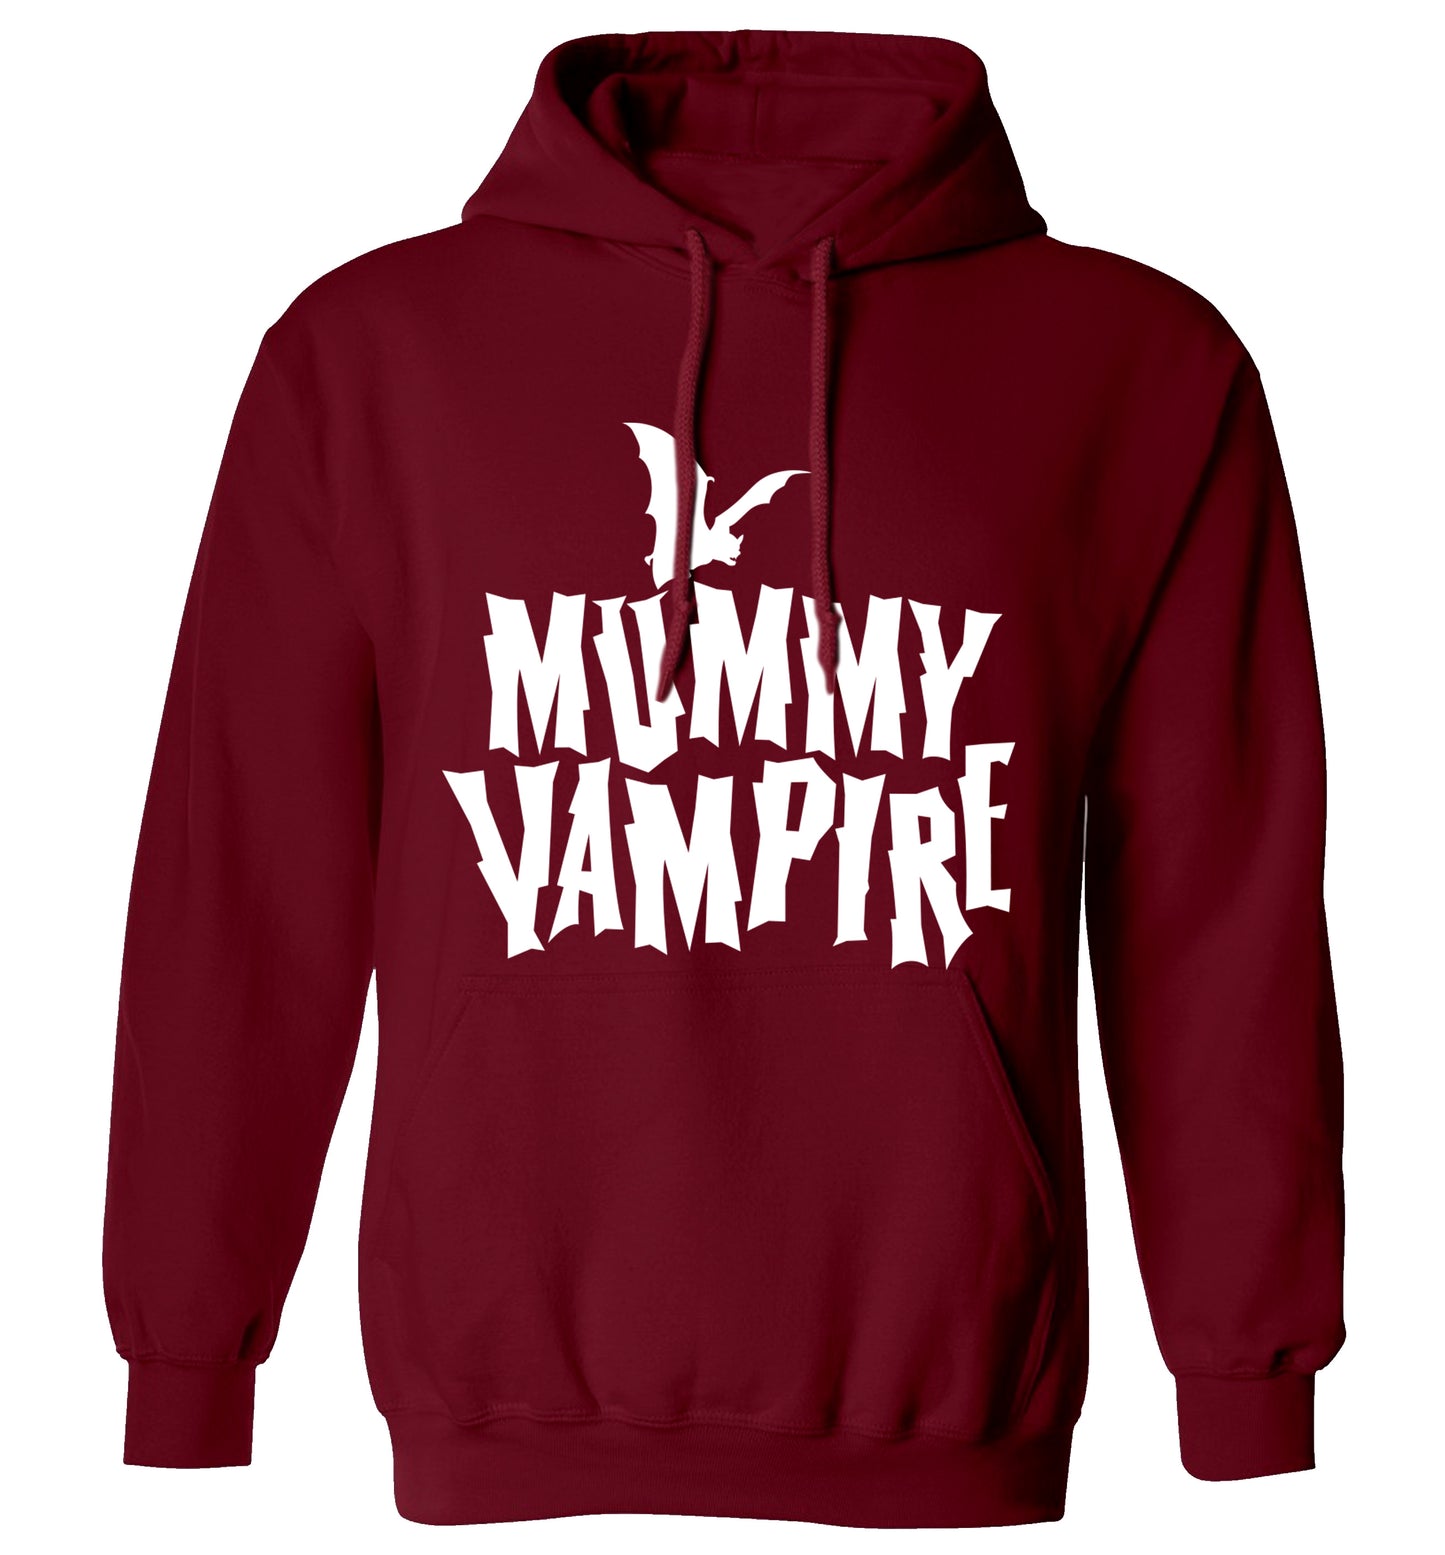 Mummy vampire adults unisex maroon hoodie 2XL